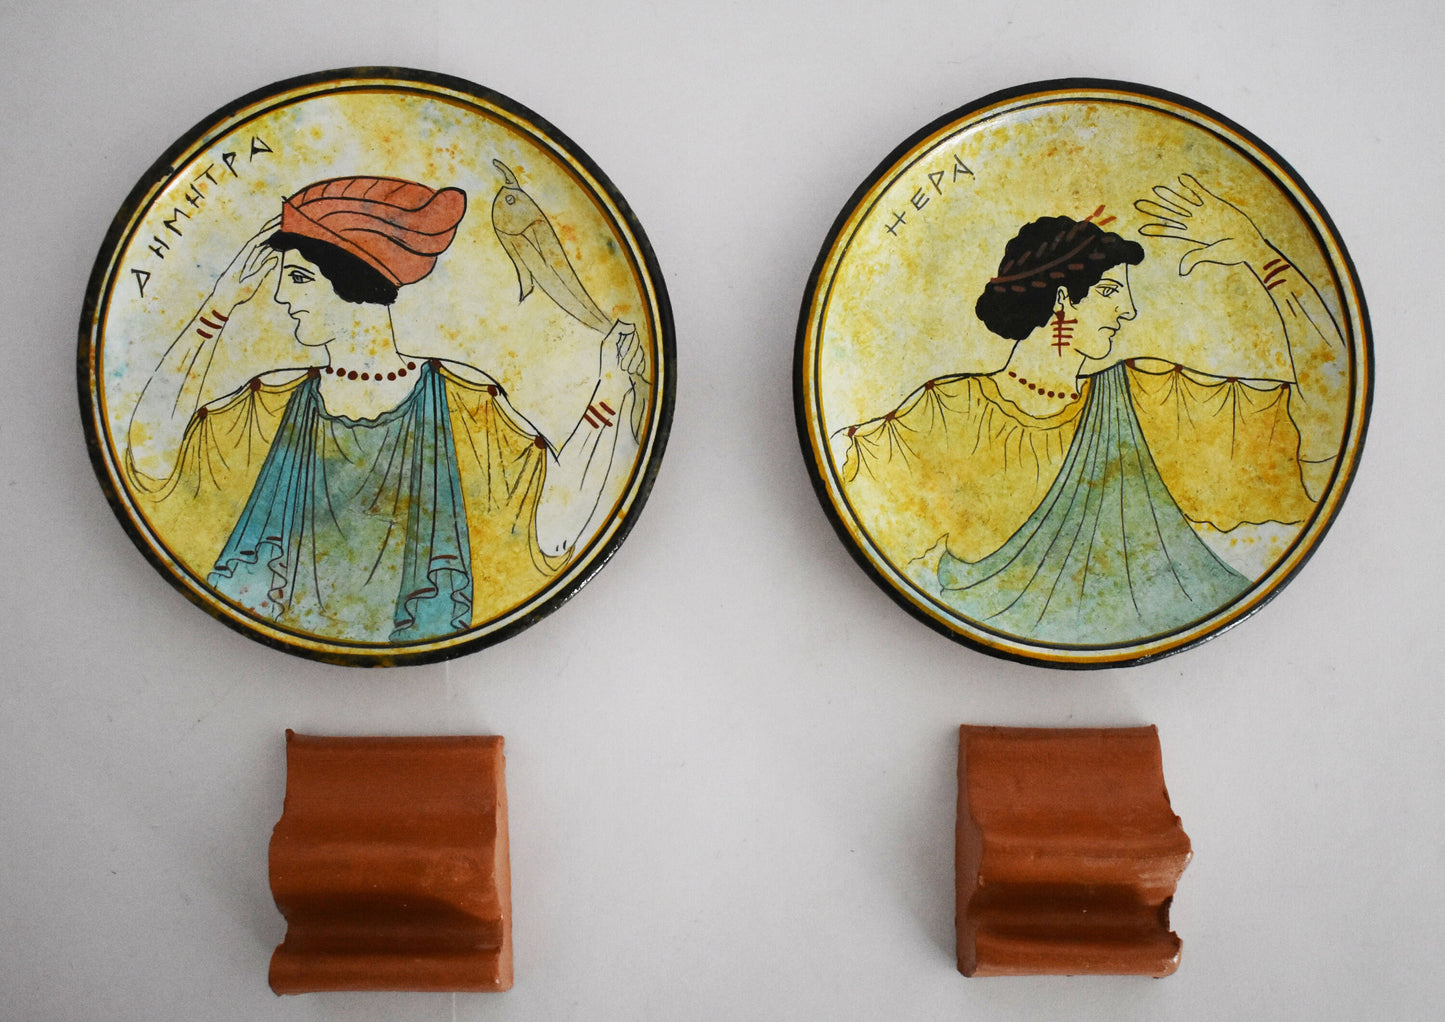 Set of two Plates - Demeter Ceres and Hera Juno - Classic Period - Attica - Athens - 450 BC - Desk Miniatures - Ceramic Items